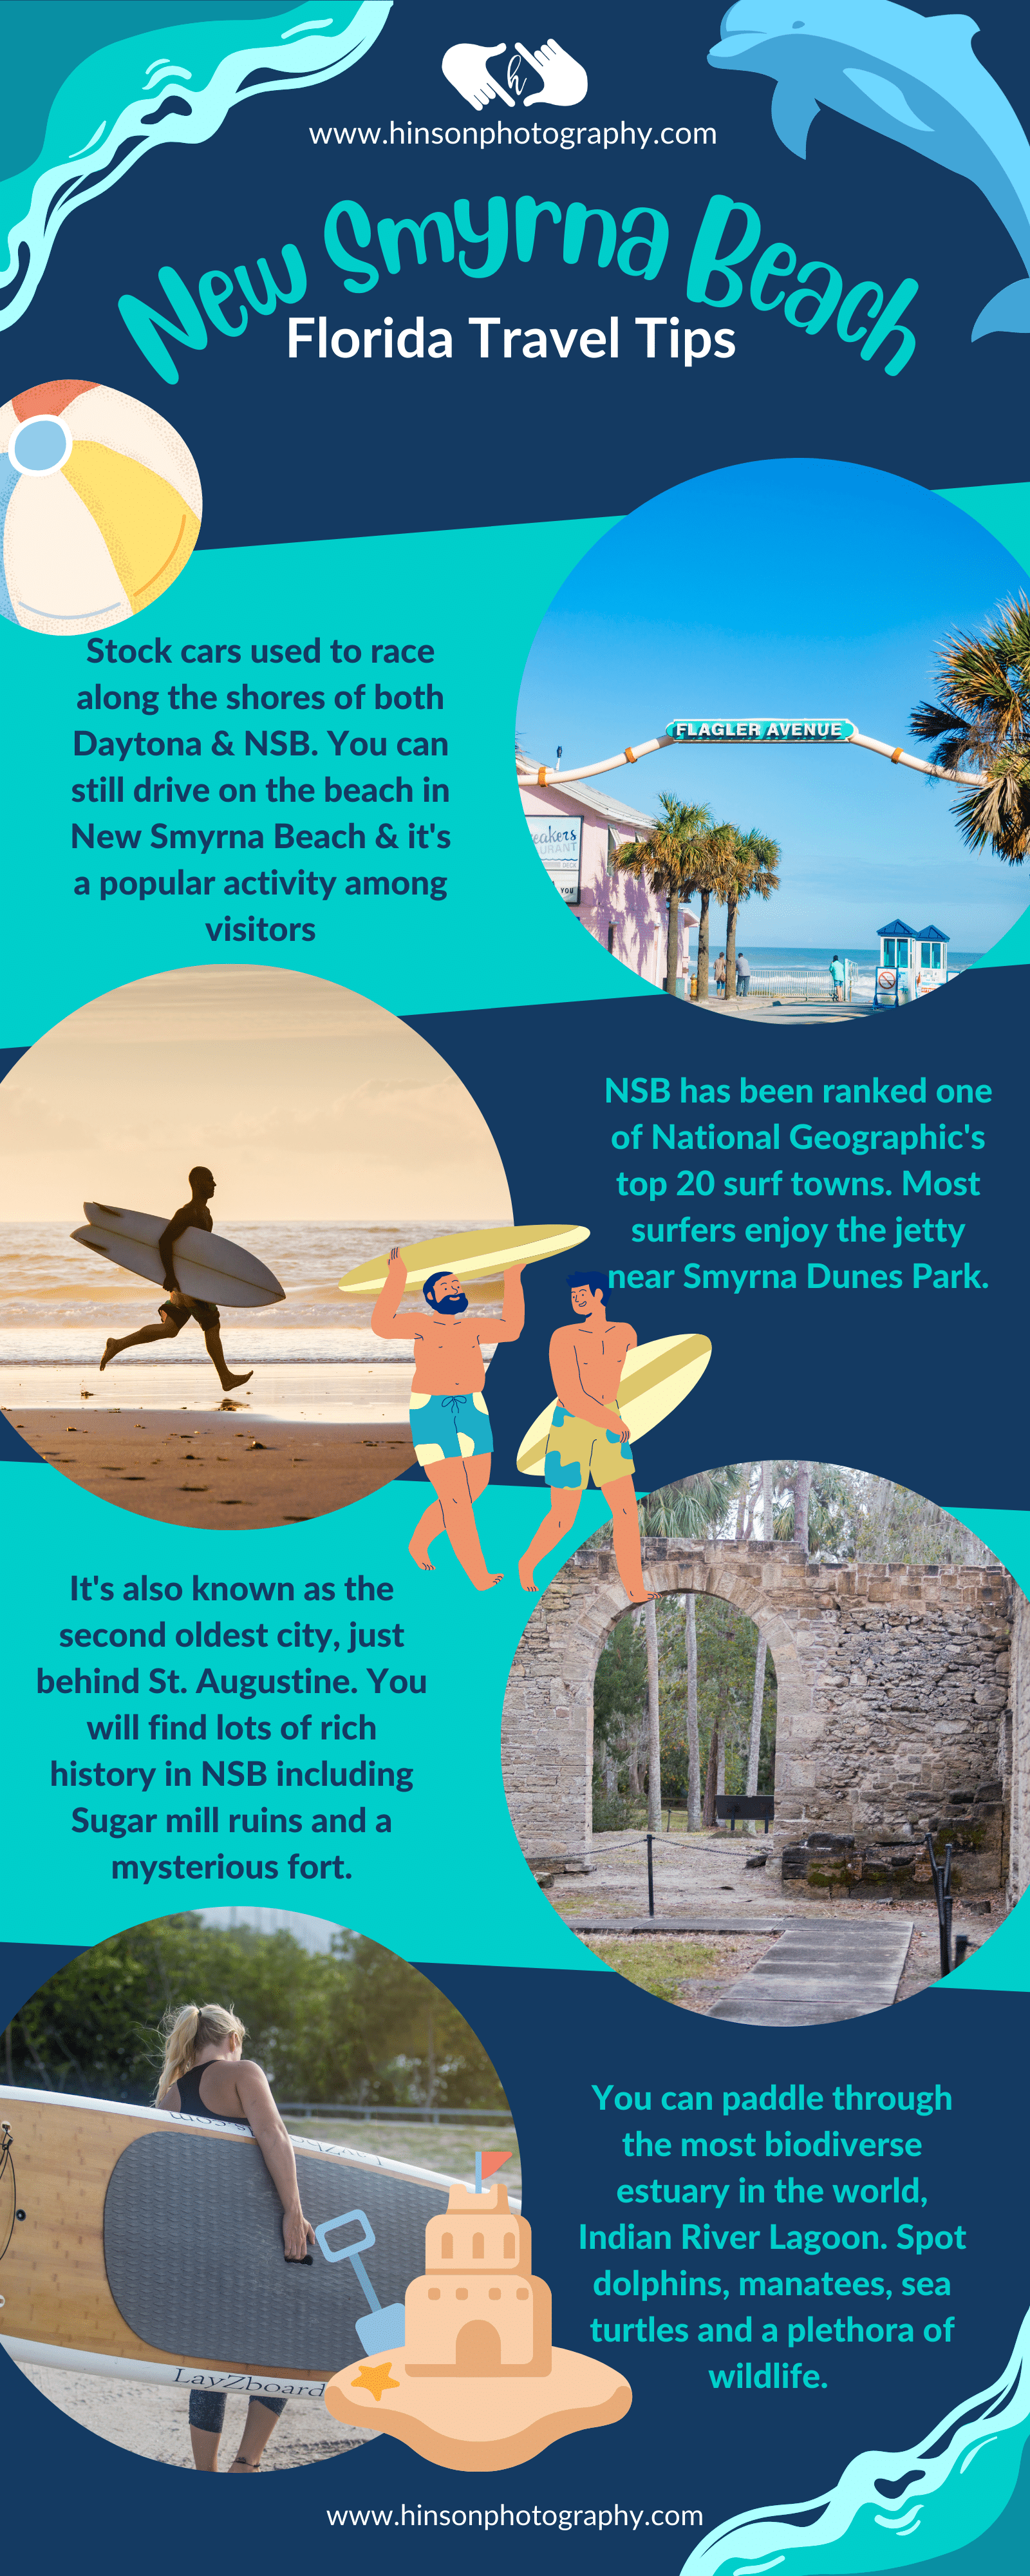 New smyrna beach travel tips infographic